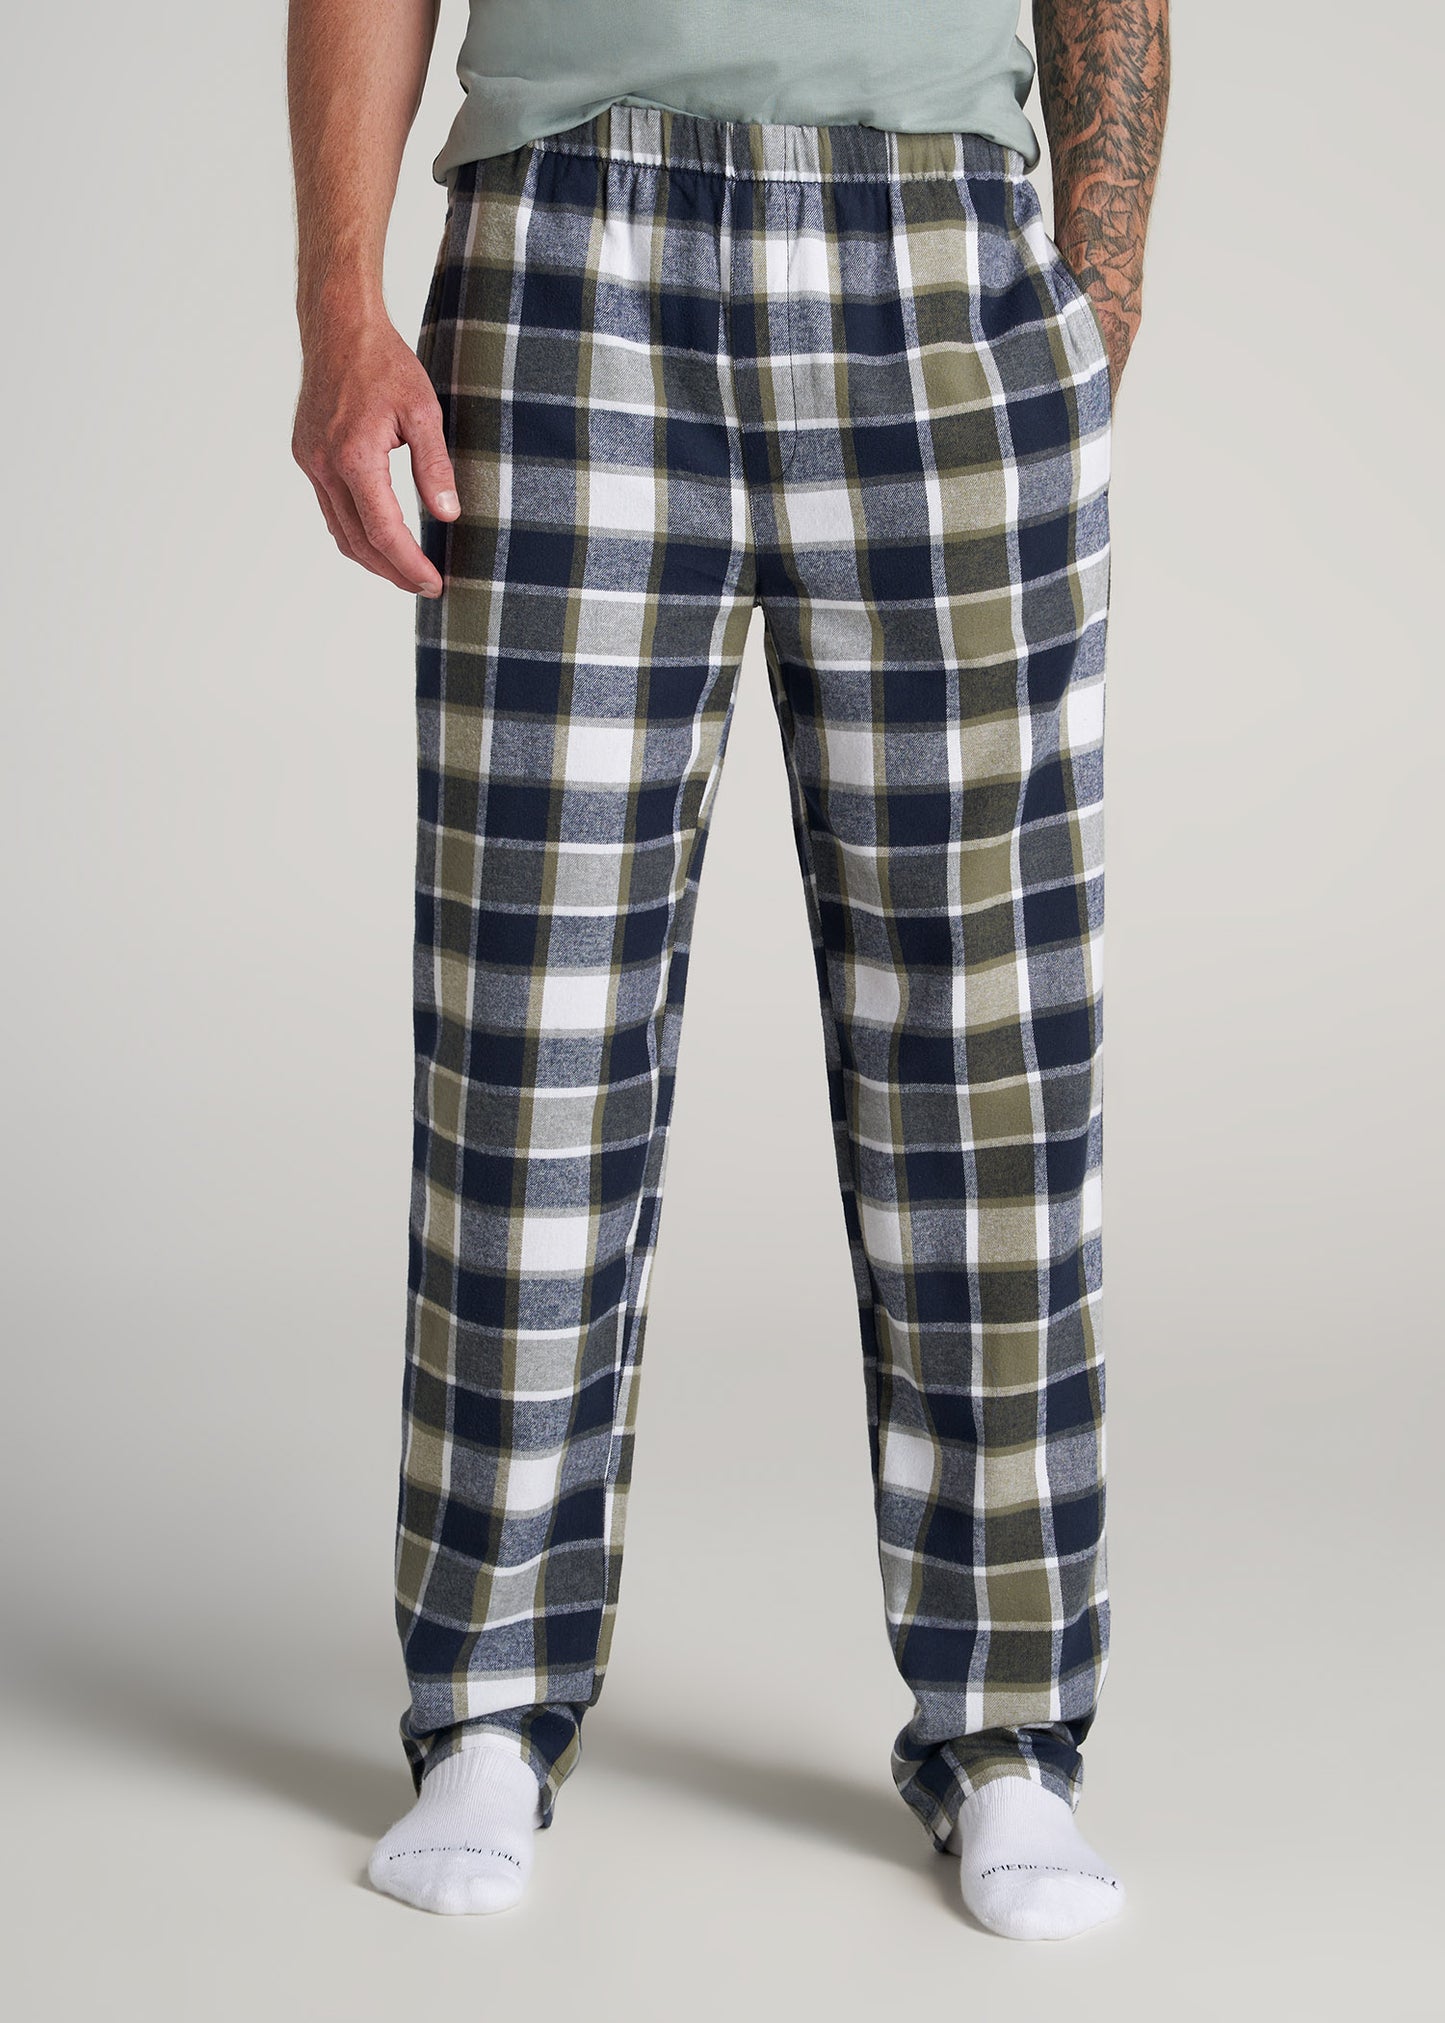 Blue & Black Flannel Plaid Pyjama for Men